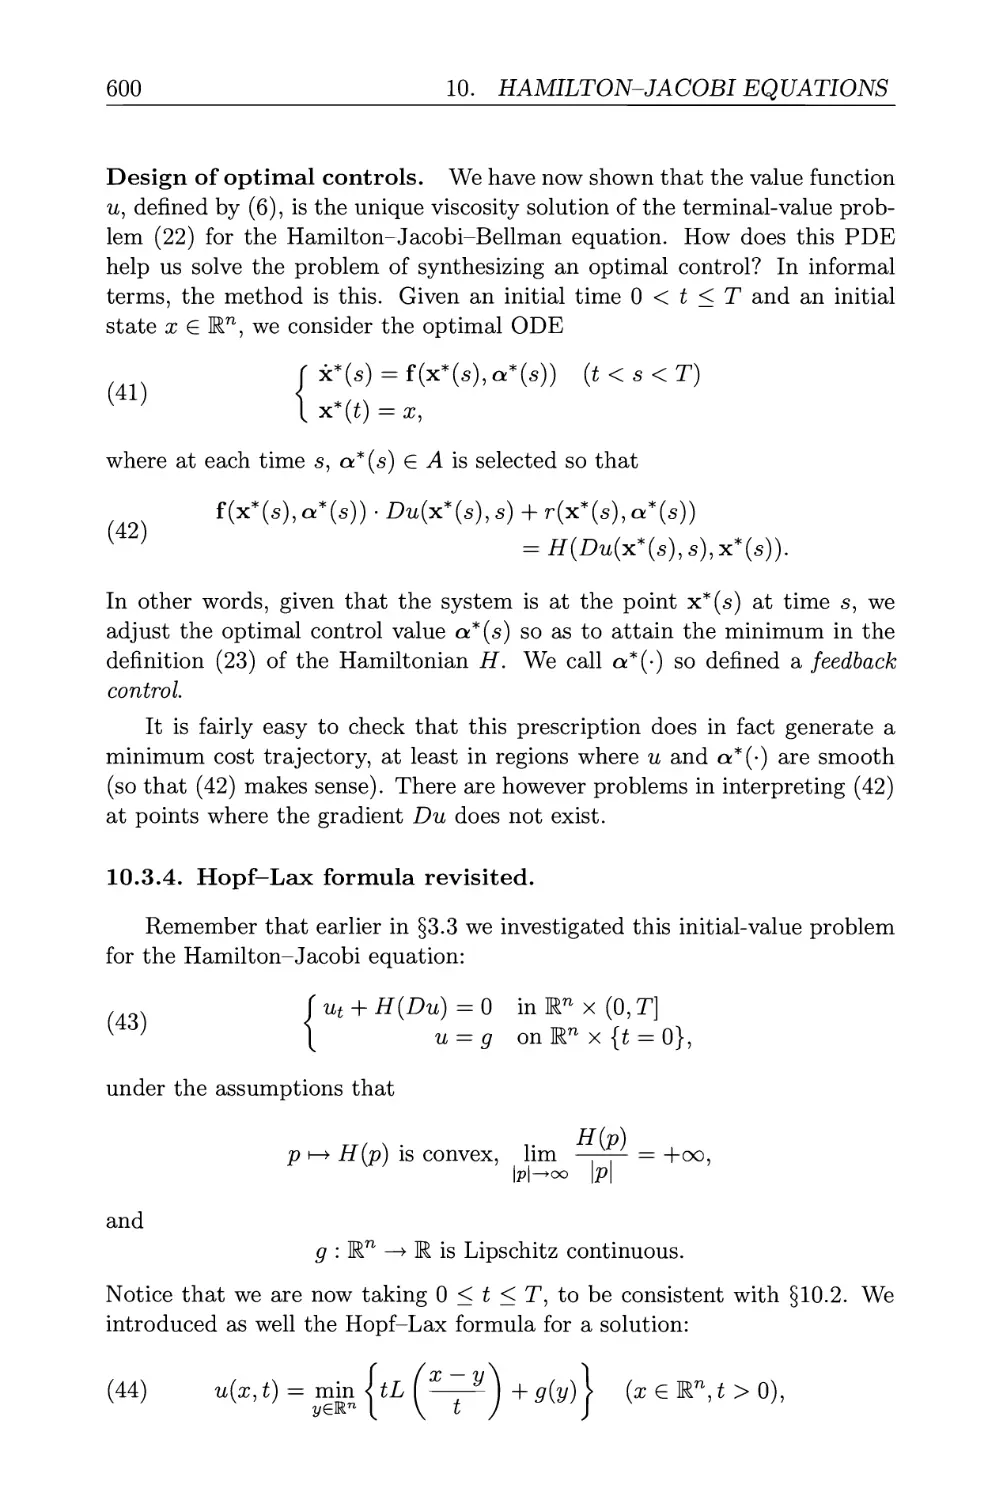 10.3.4. Hopf-Lax formula revisited